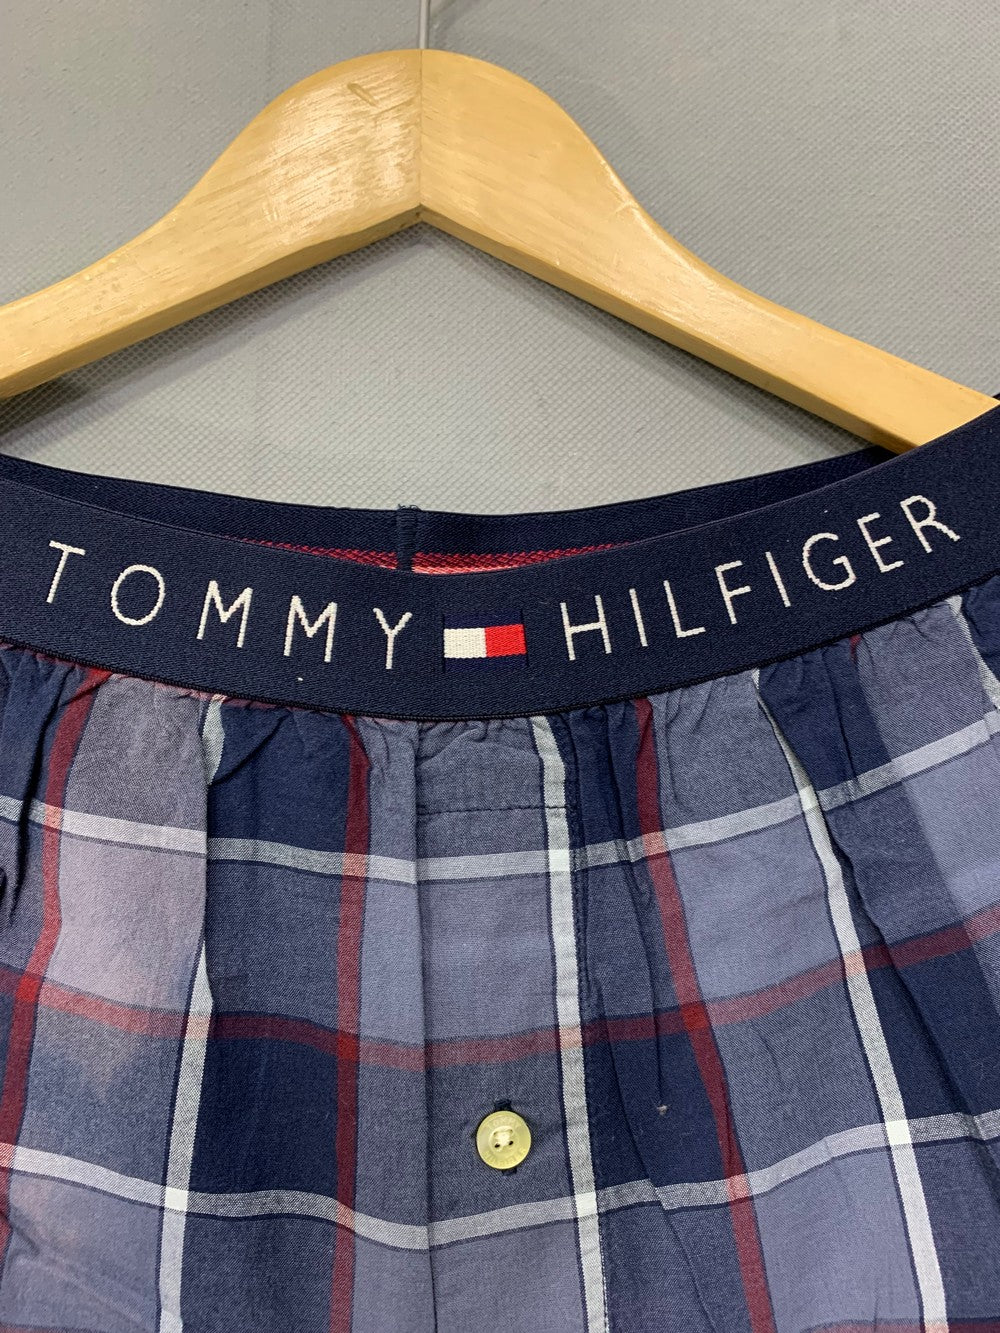 Tommy Hilfiger Original Branded Boxer Underwear For Men